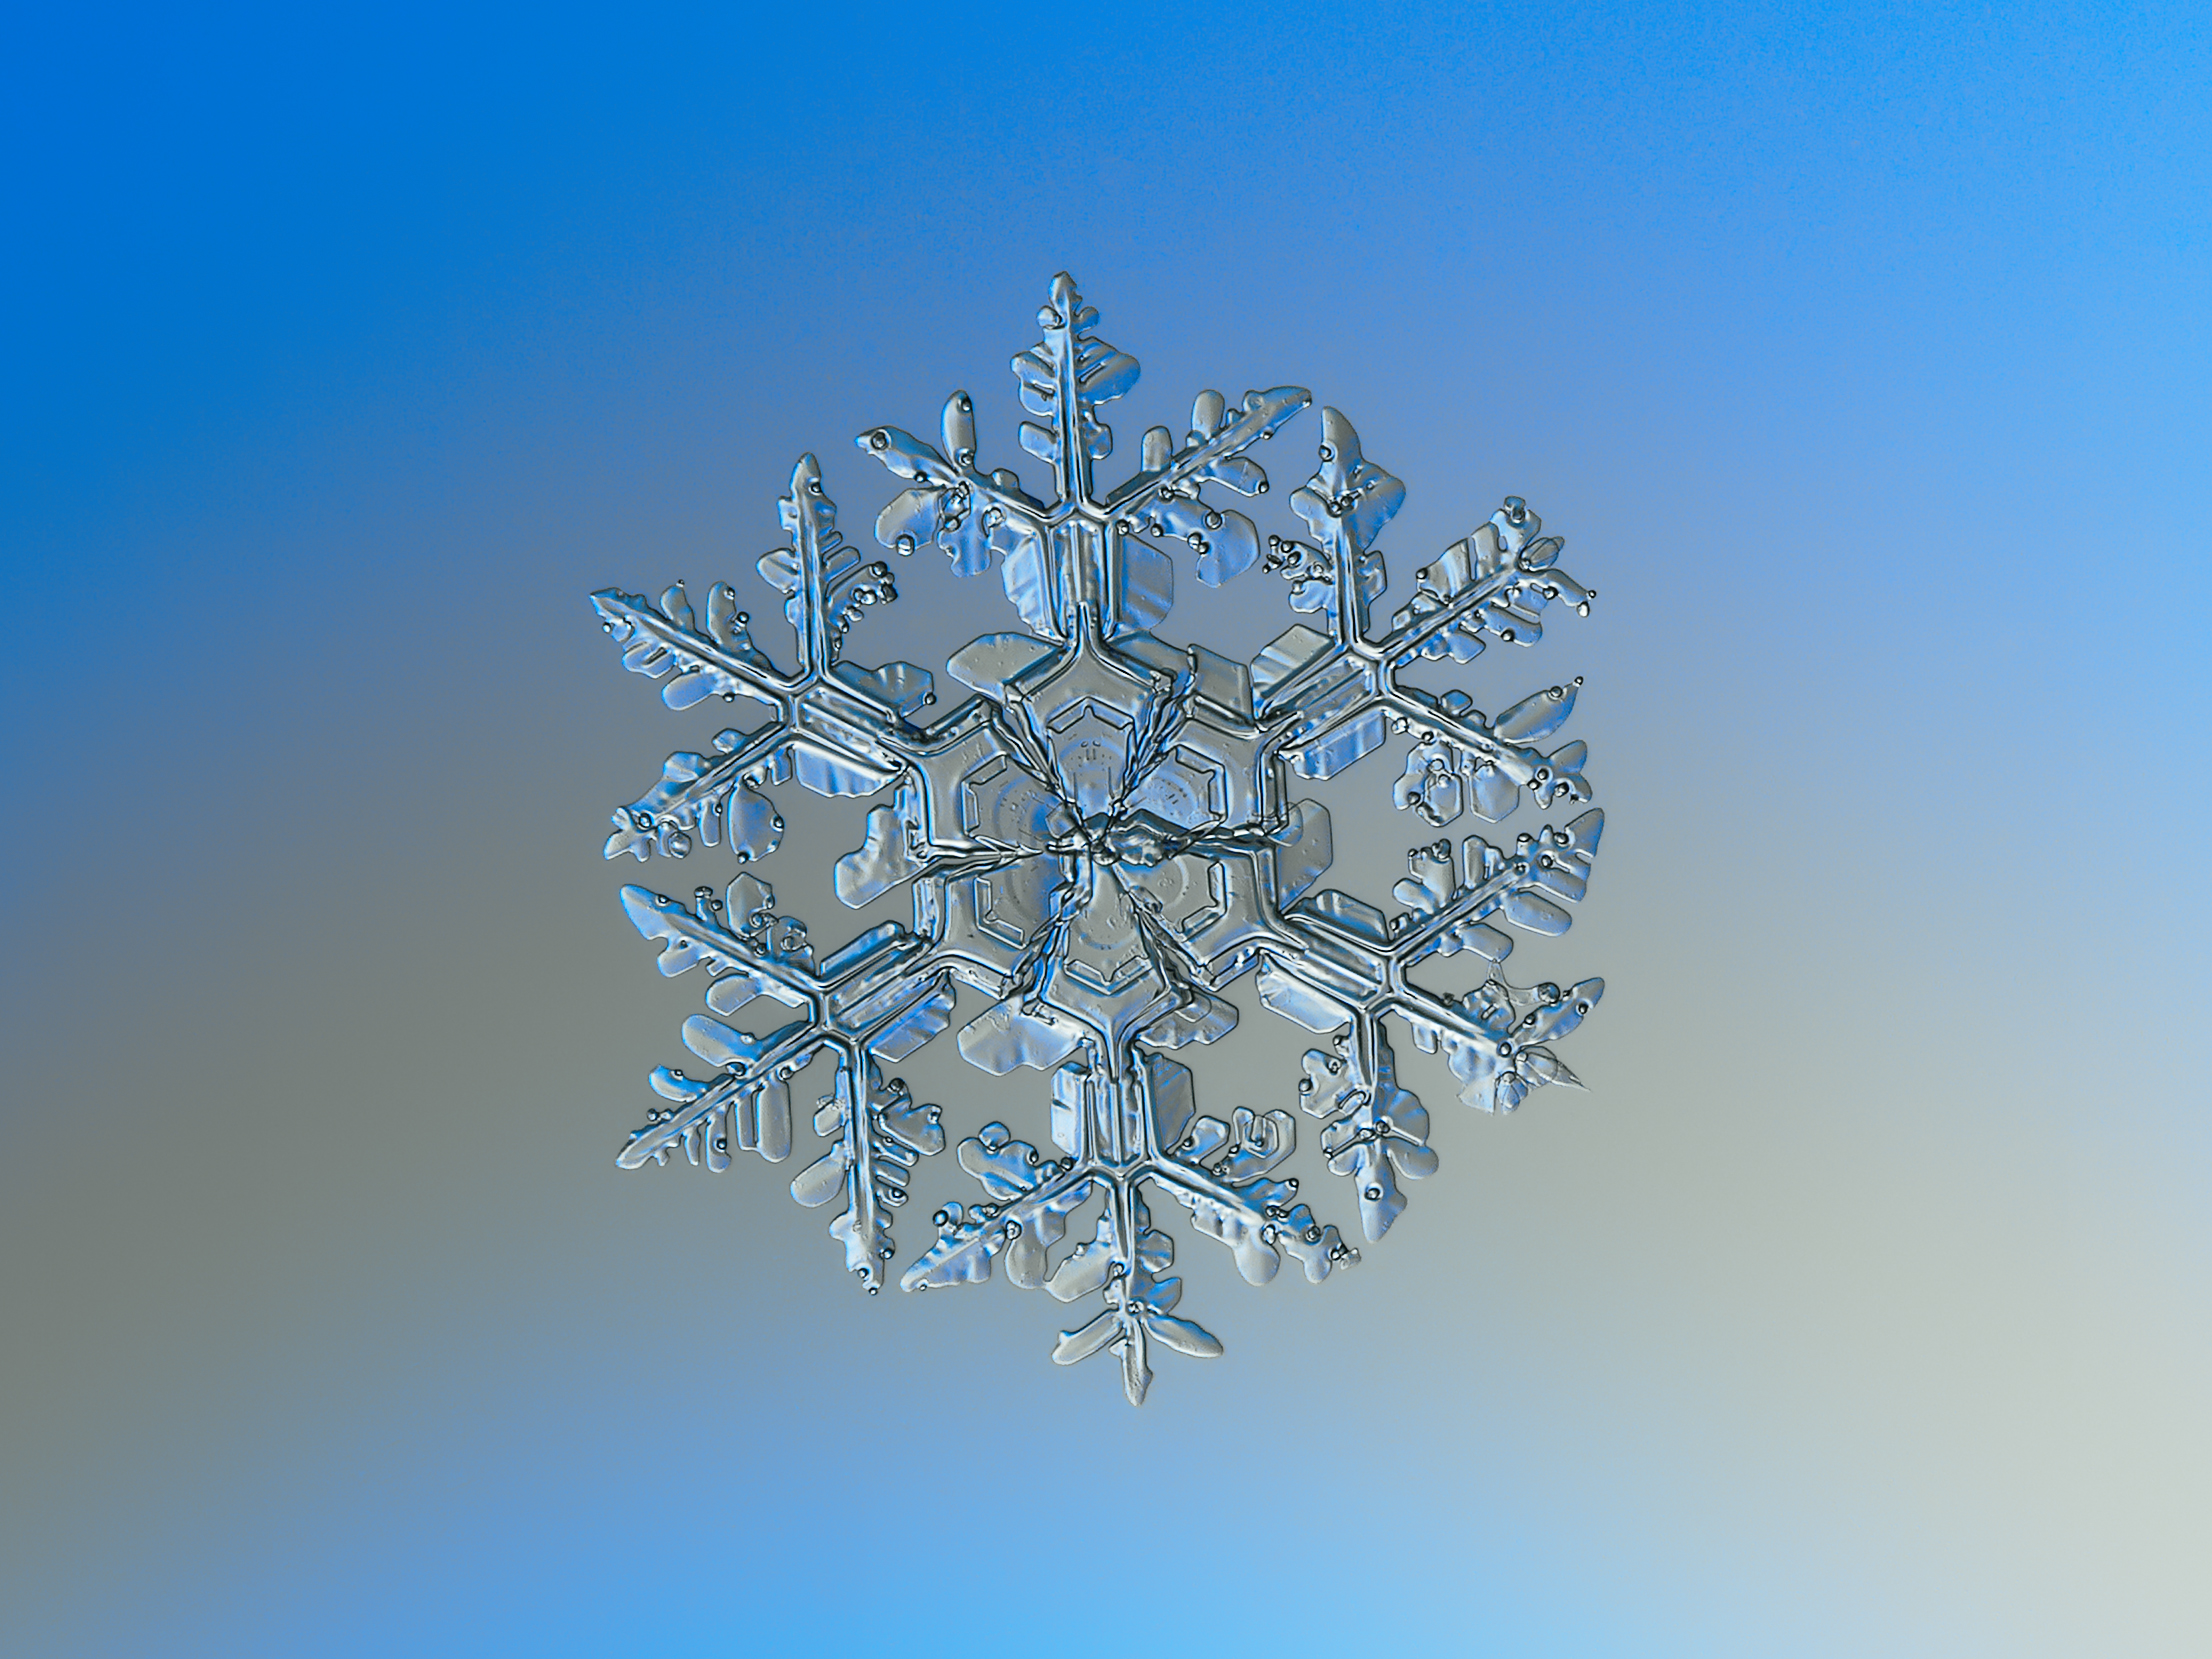 File:Snowflake macro photography 1.jpg - Wikimedia Commons